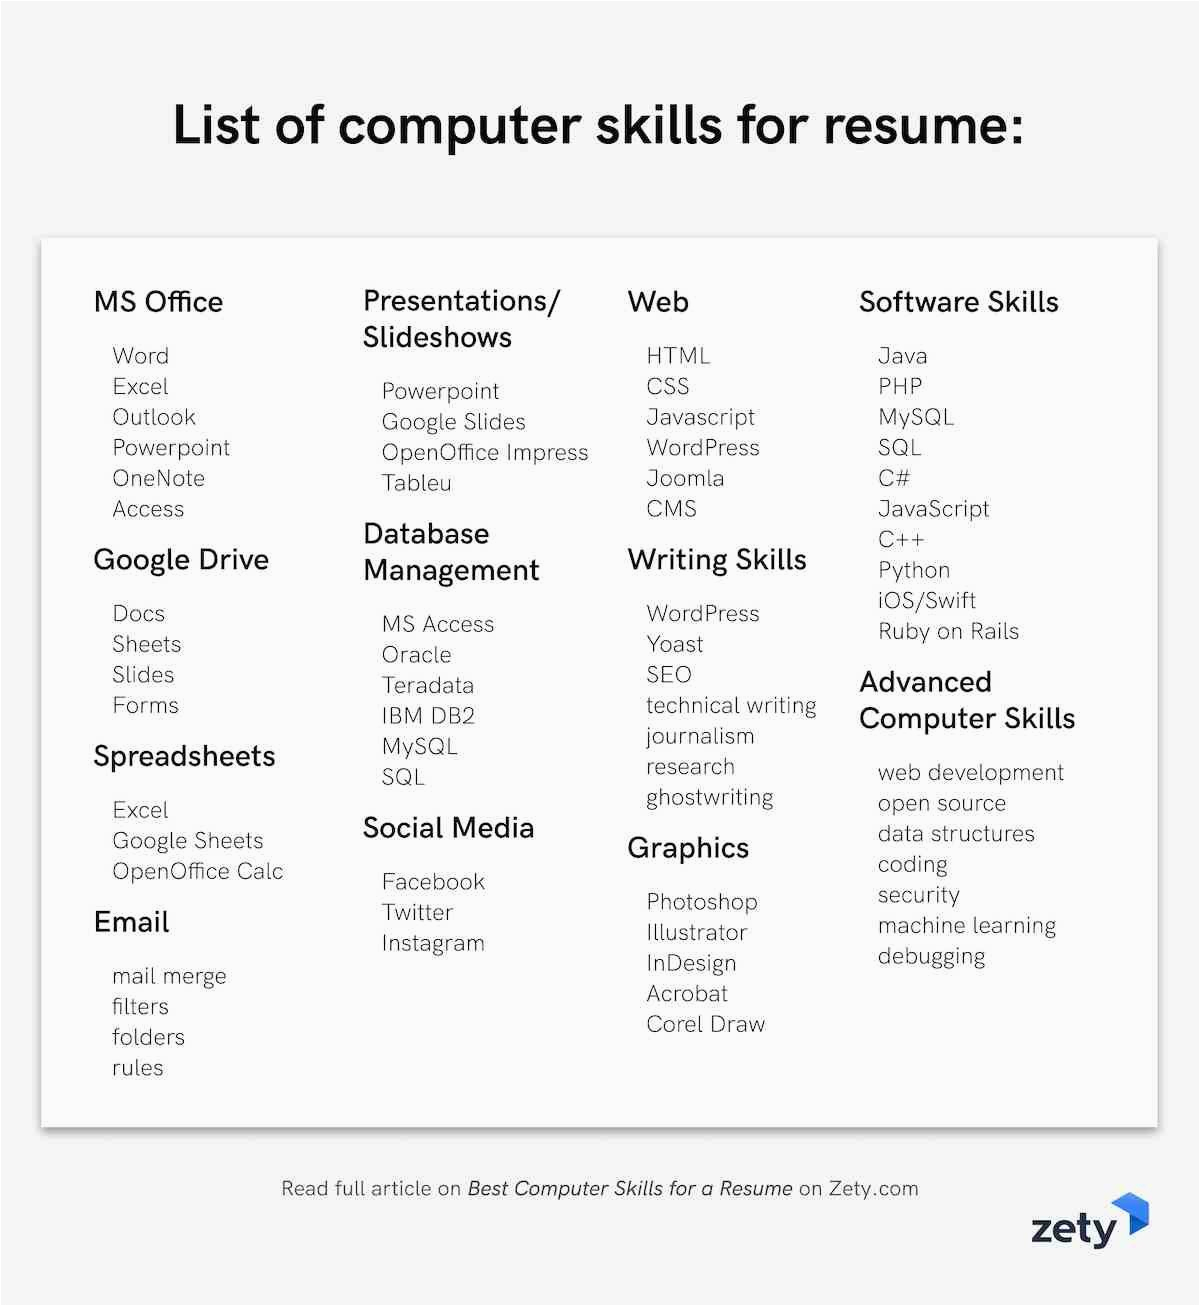 Describe Your Computer Skills Resume Sample Best Puter Skills for A Resume [software Skills